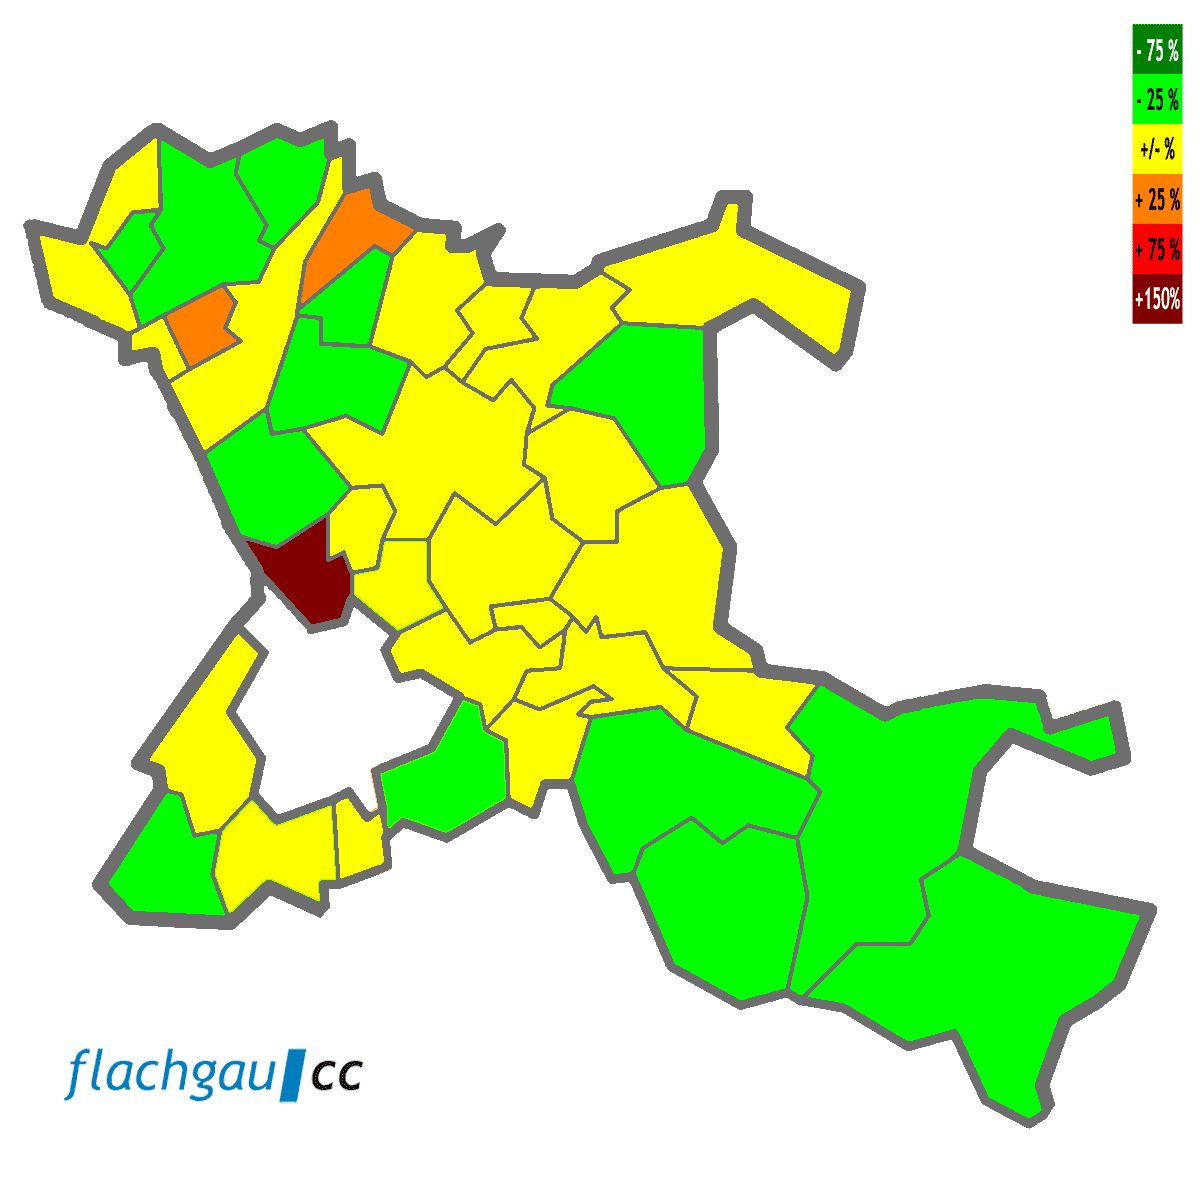 Flachgau-Landkarte: Corona-Virus Infektionen, Relativ zum Bezirksdurchschnitt per 2022-05-08 © flachgau|cc